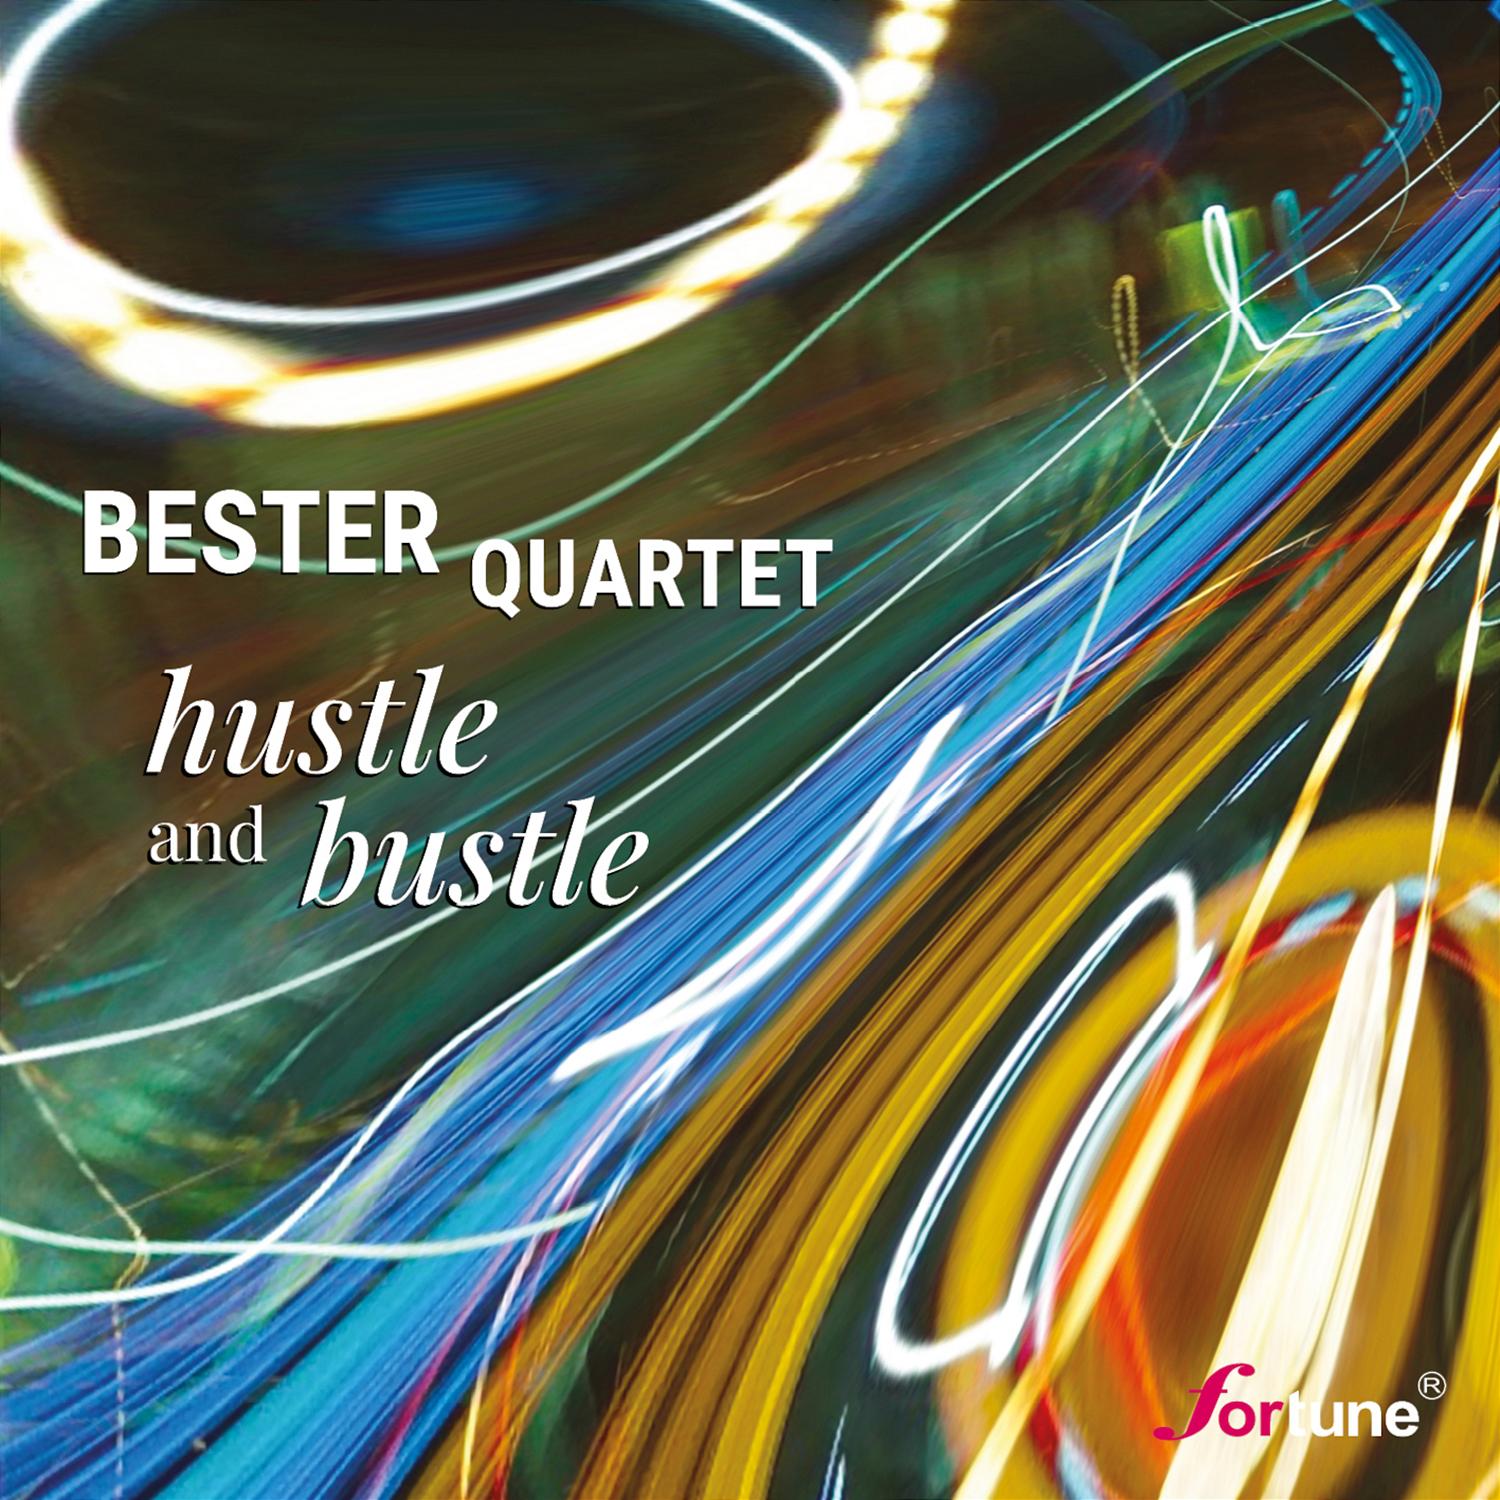 Bester Quartet - Scottish Wind